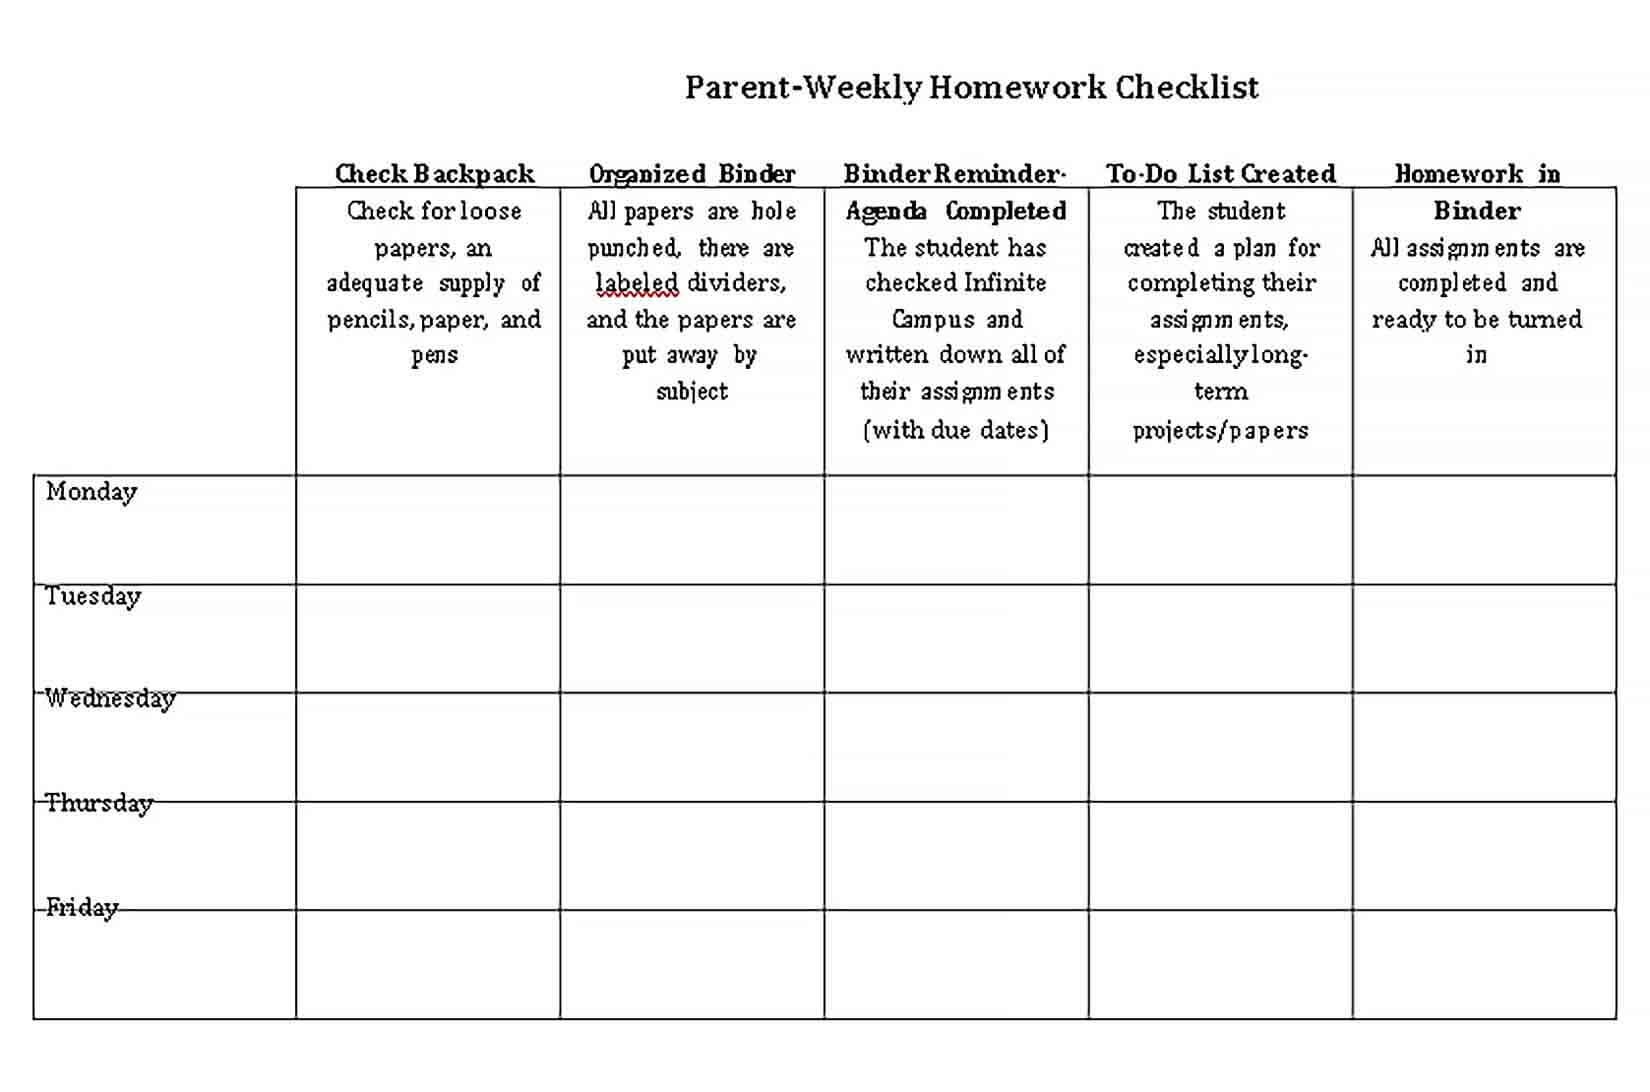 Sample Weekly Homework Checklist Template